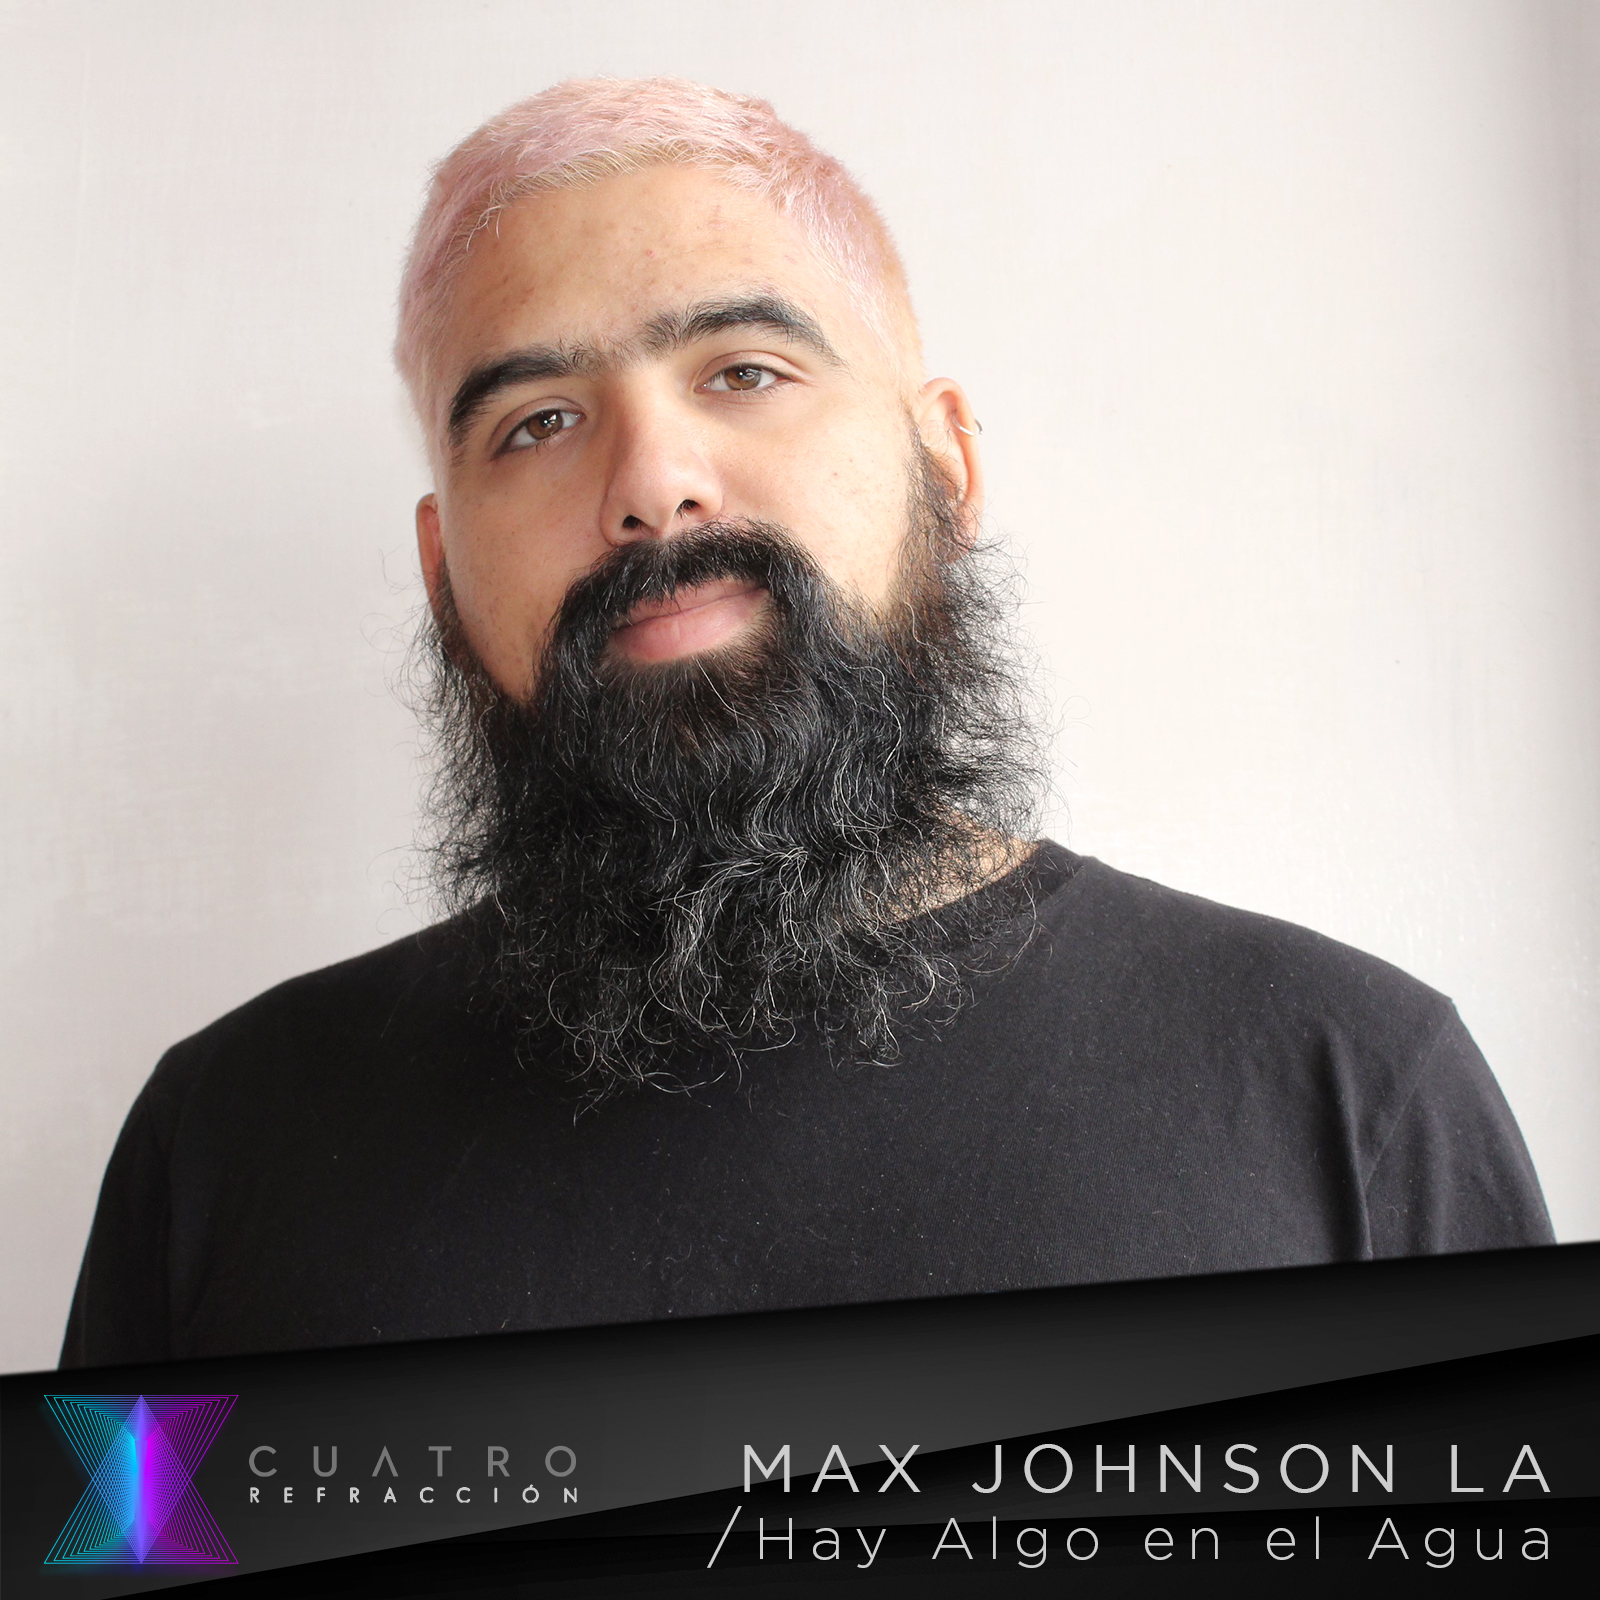 Max Johnson La